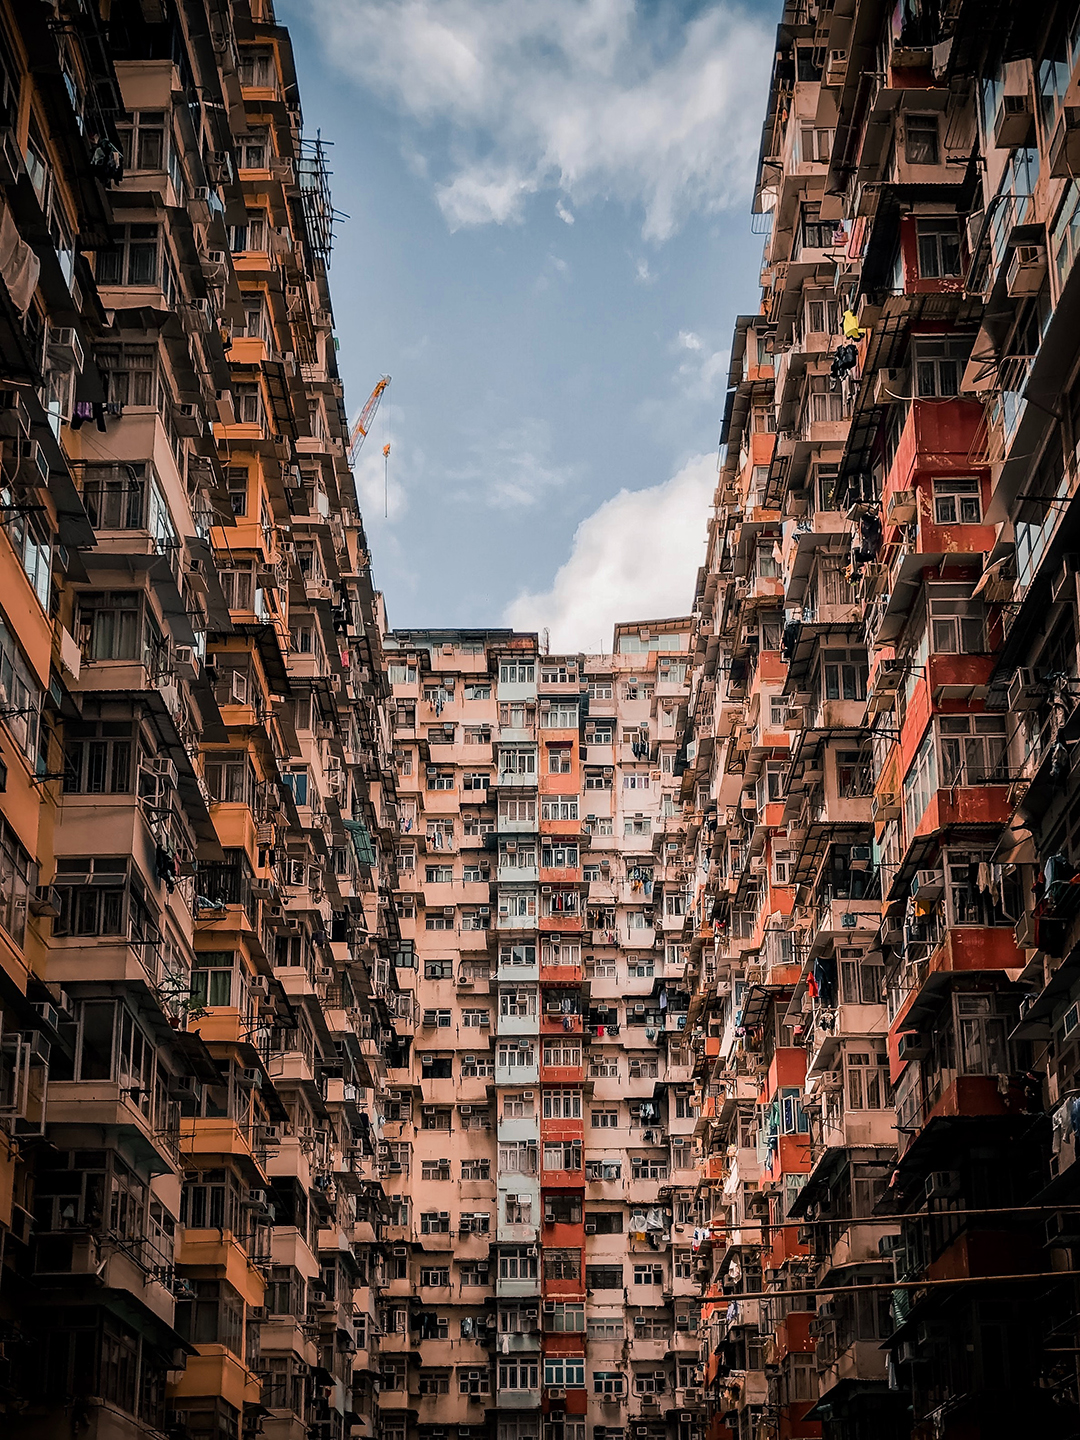 Turisticne_znamenitosti_Hong_Konga_-_Tourist_attractions_of_Hong_Kong_-_Photo_by_Aleksandar_Pasaric_from_Pexels.jpg